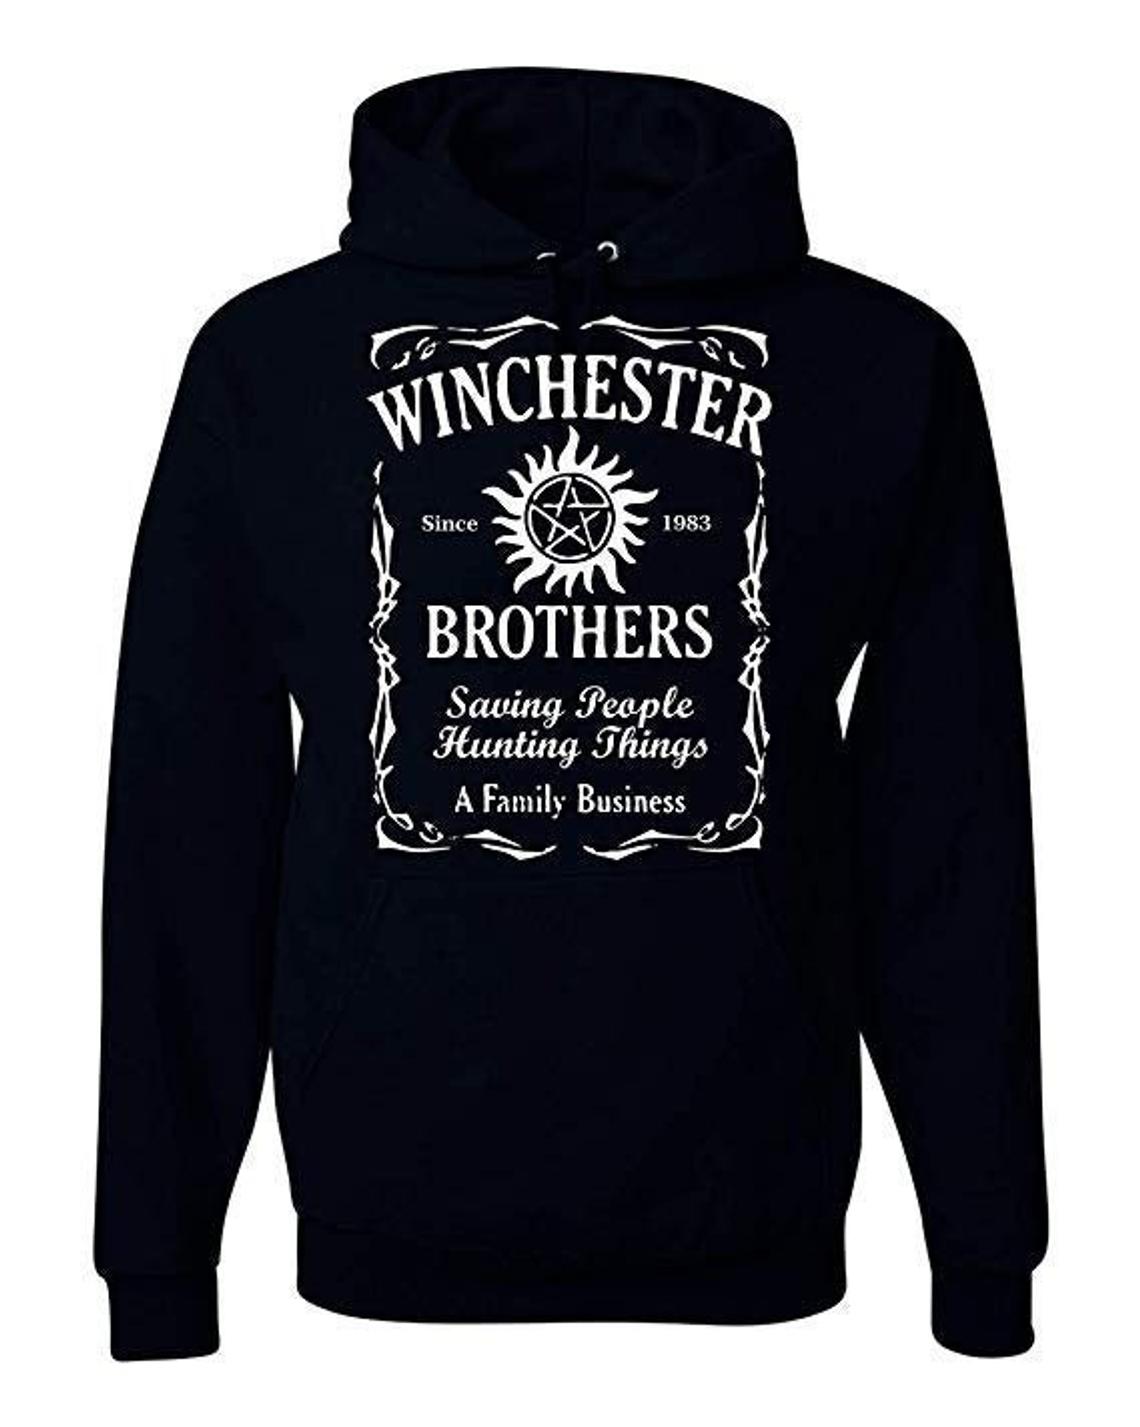 Supernatural Winchester Brothers Whiskey Style Unisex Hooded Sweatshirt - New Black